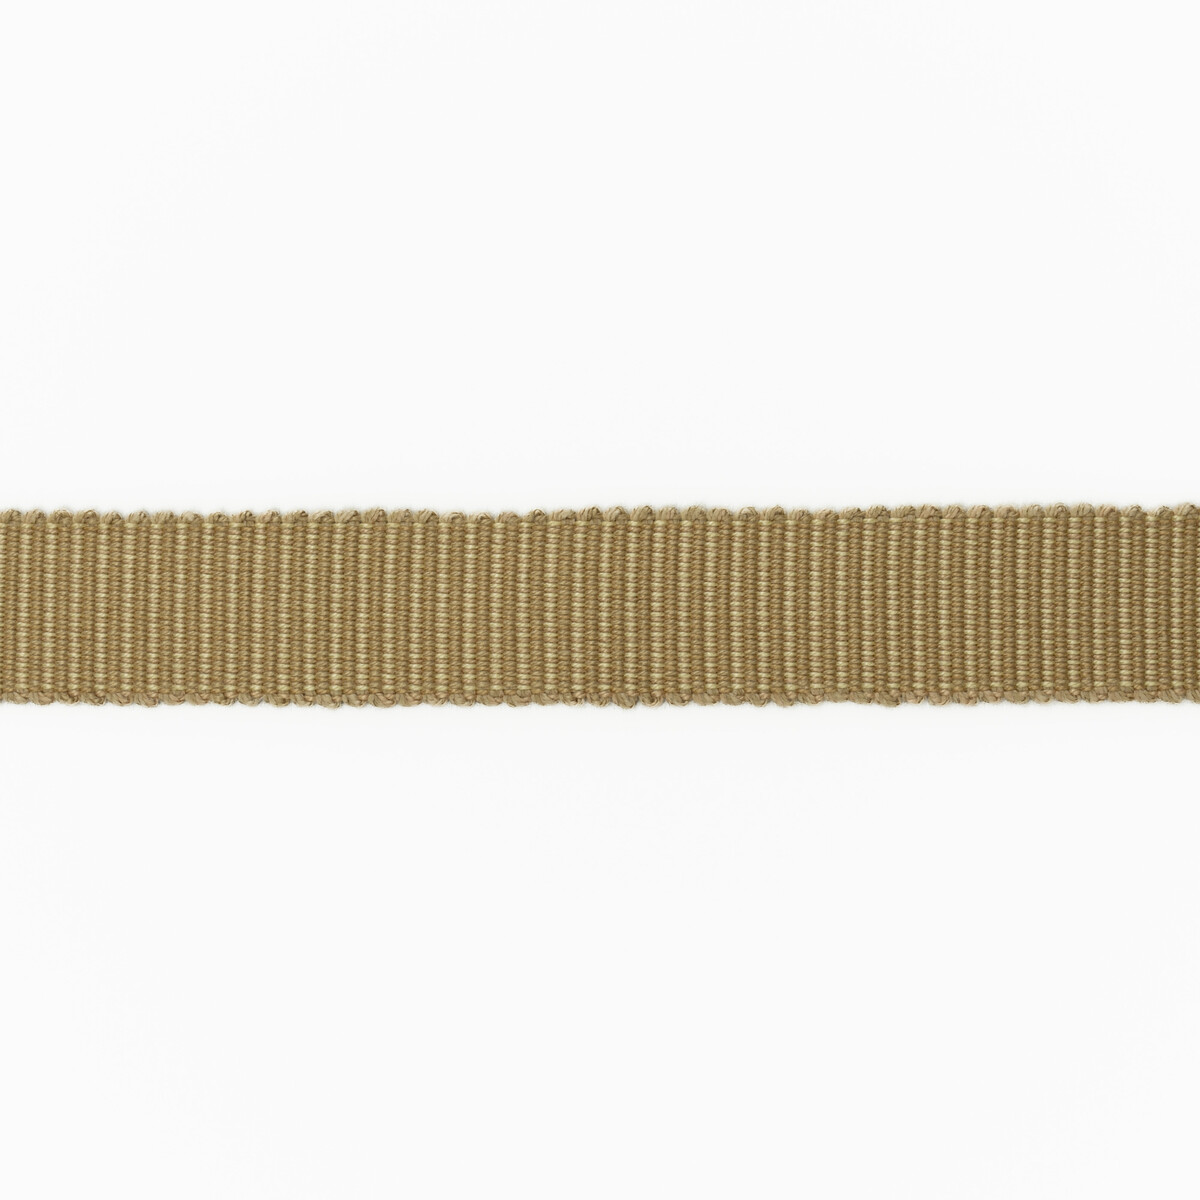 G P & J Baker T6026.830.0 Perandor Plain Braid Trim Fabric in Gold